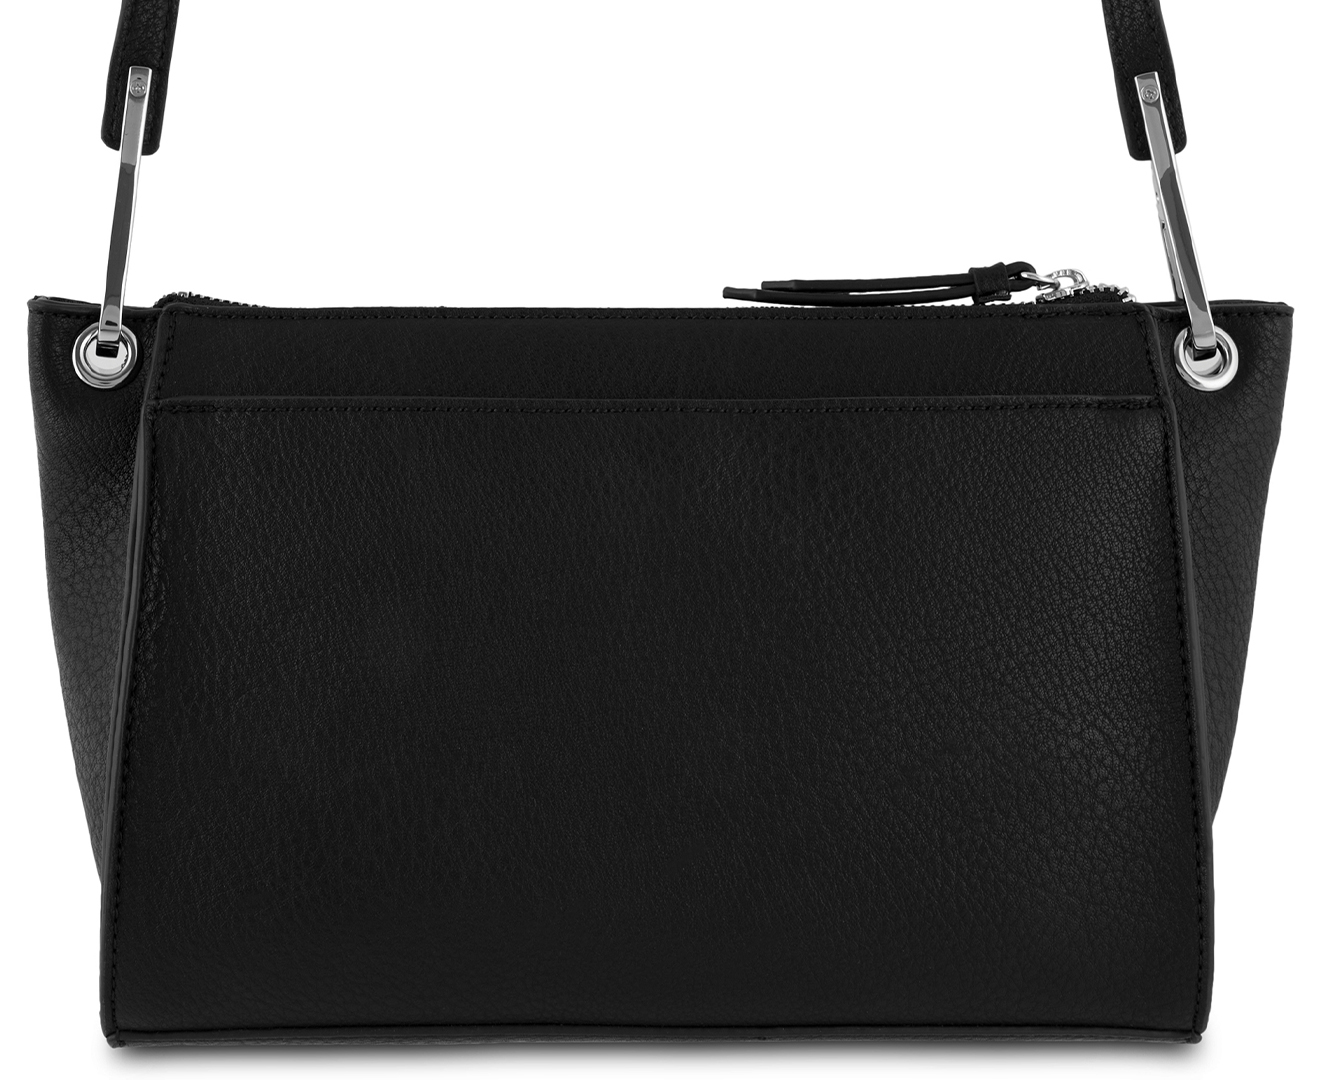 Calvin Klein Reyna Crossbody Bag - Black/Silver | Catch.co.nz